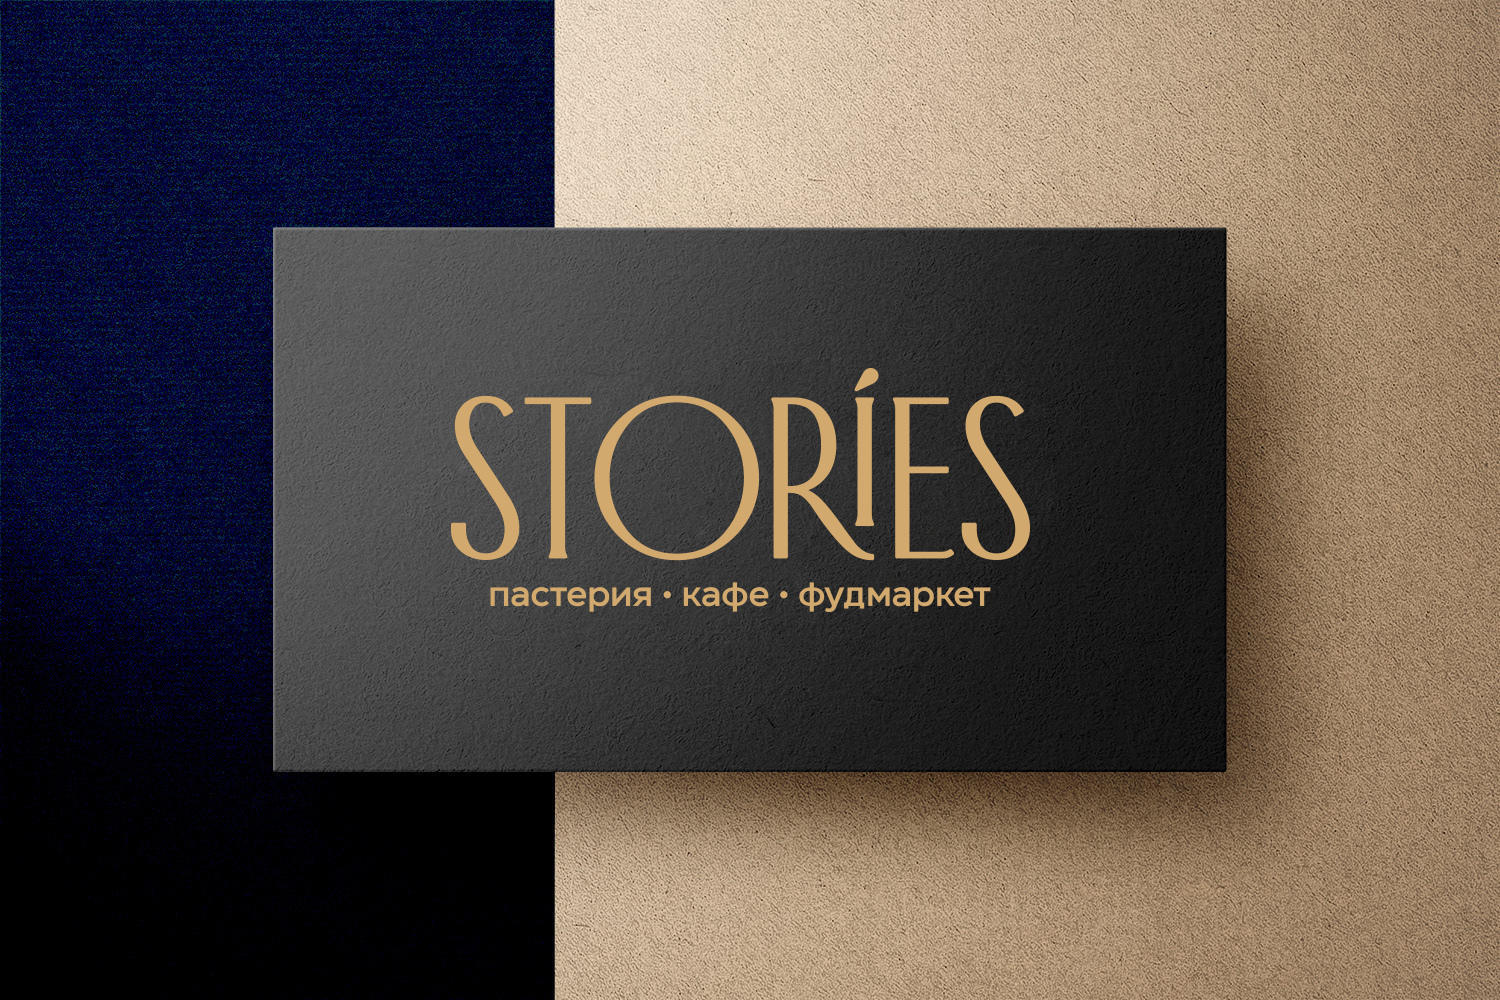 Ресторан "Stories"